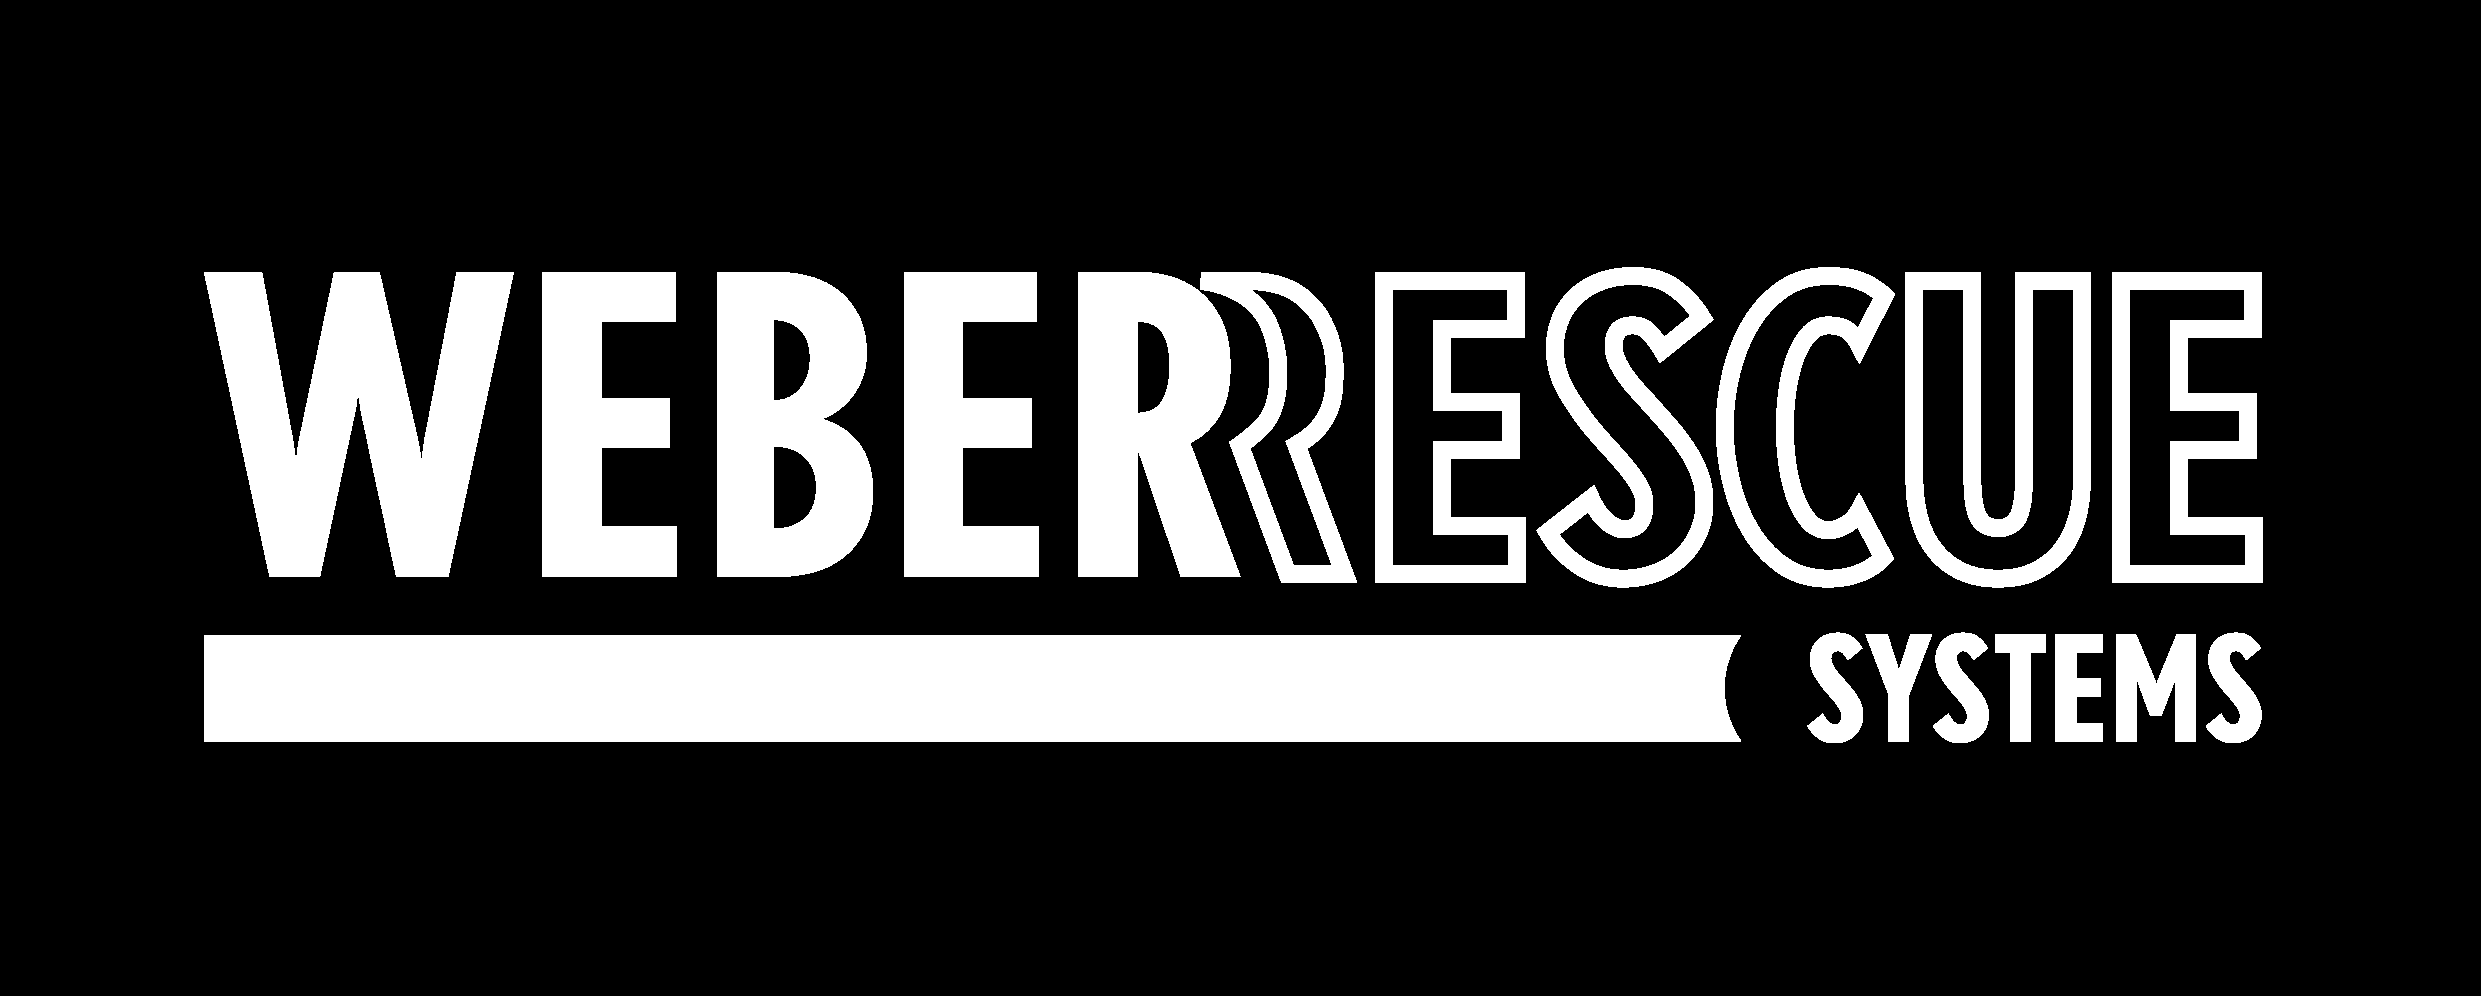 Weber Rescue Systems logo.jpg